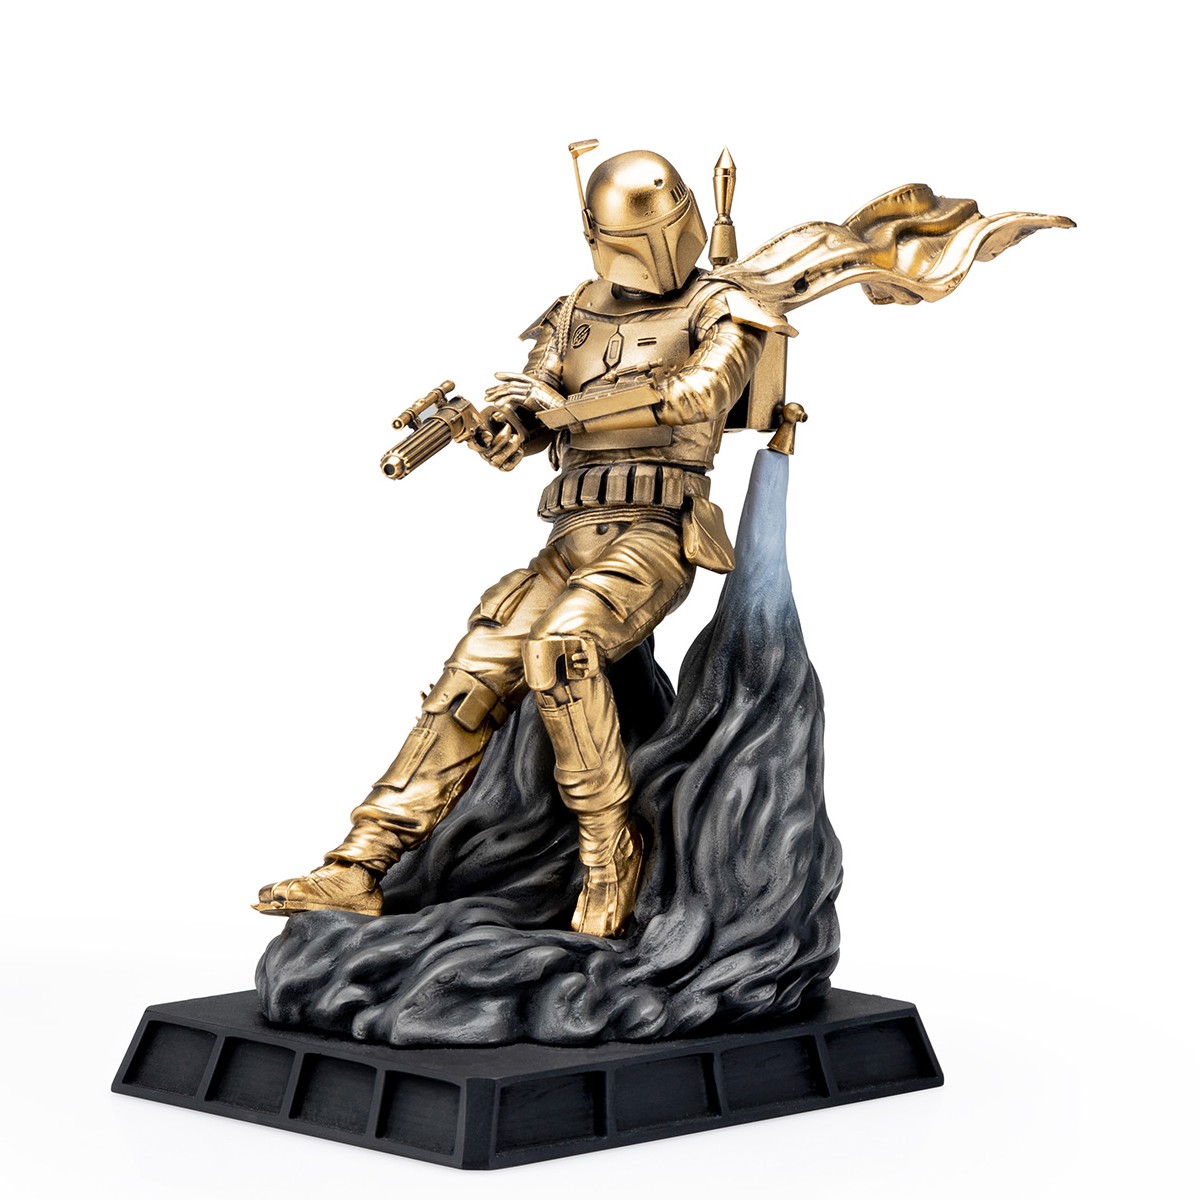 Boba Fett Battle Ready Figurine (Gilt Edition)- Prototype Shown